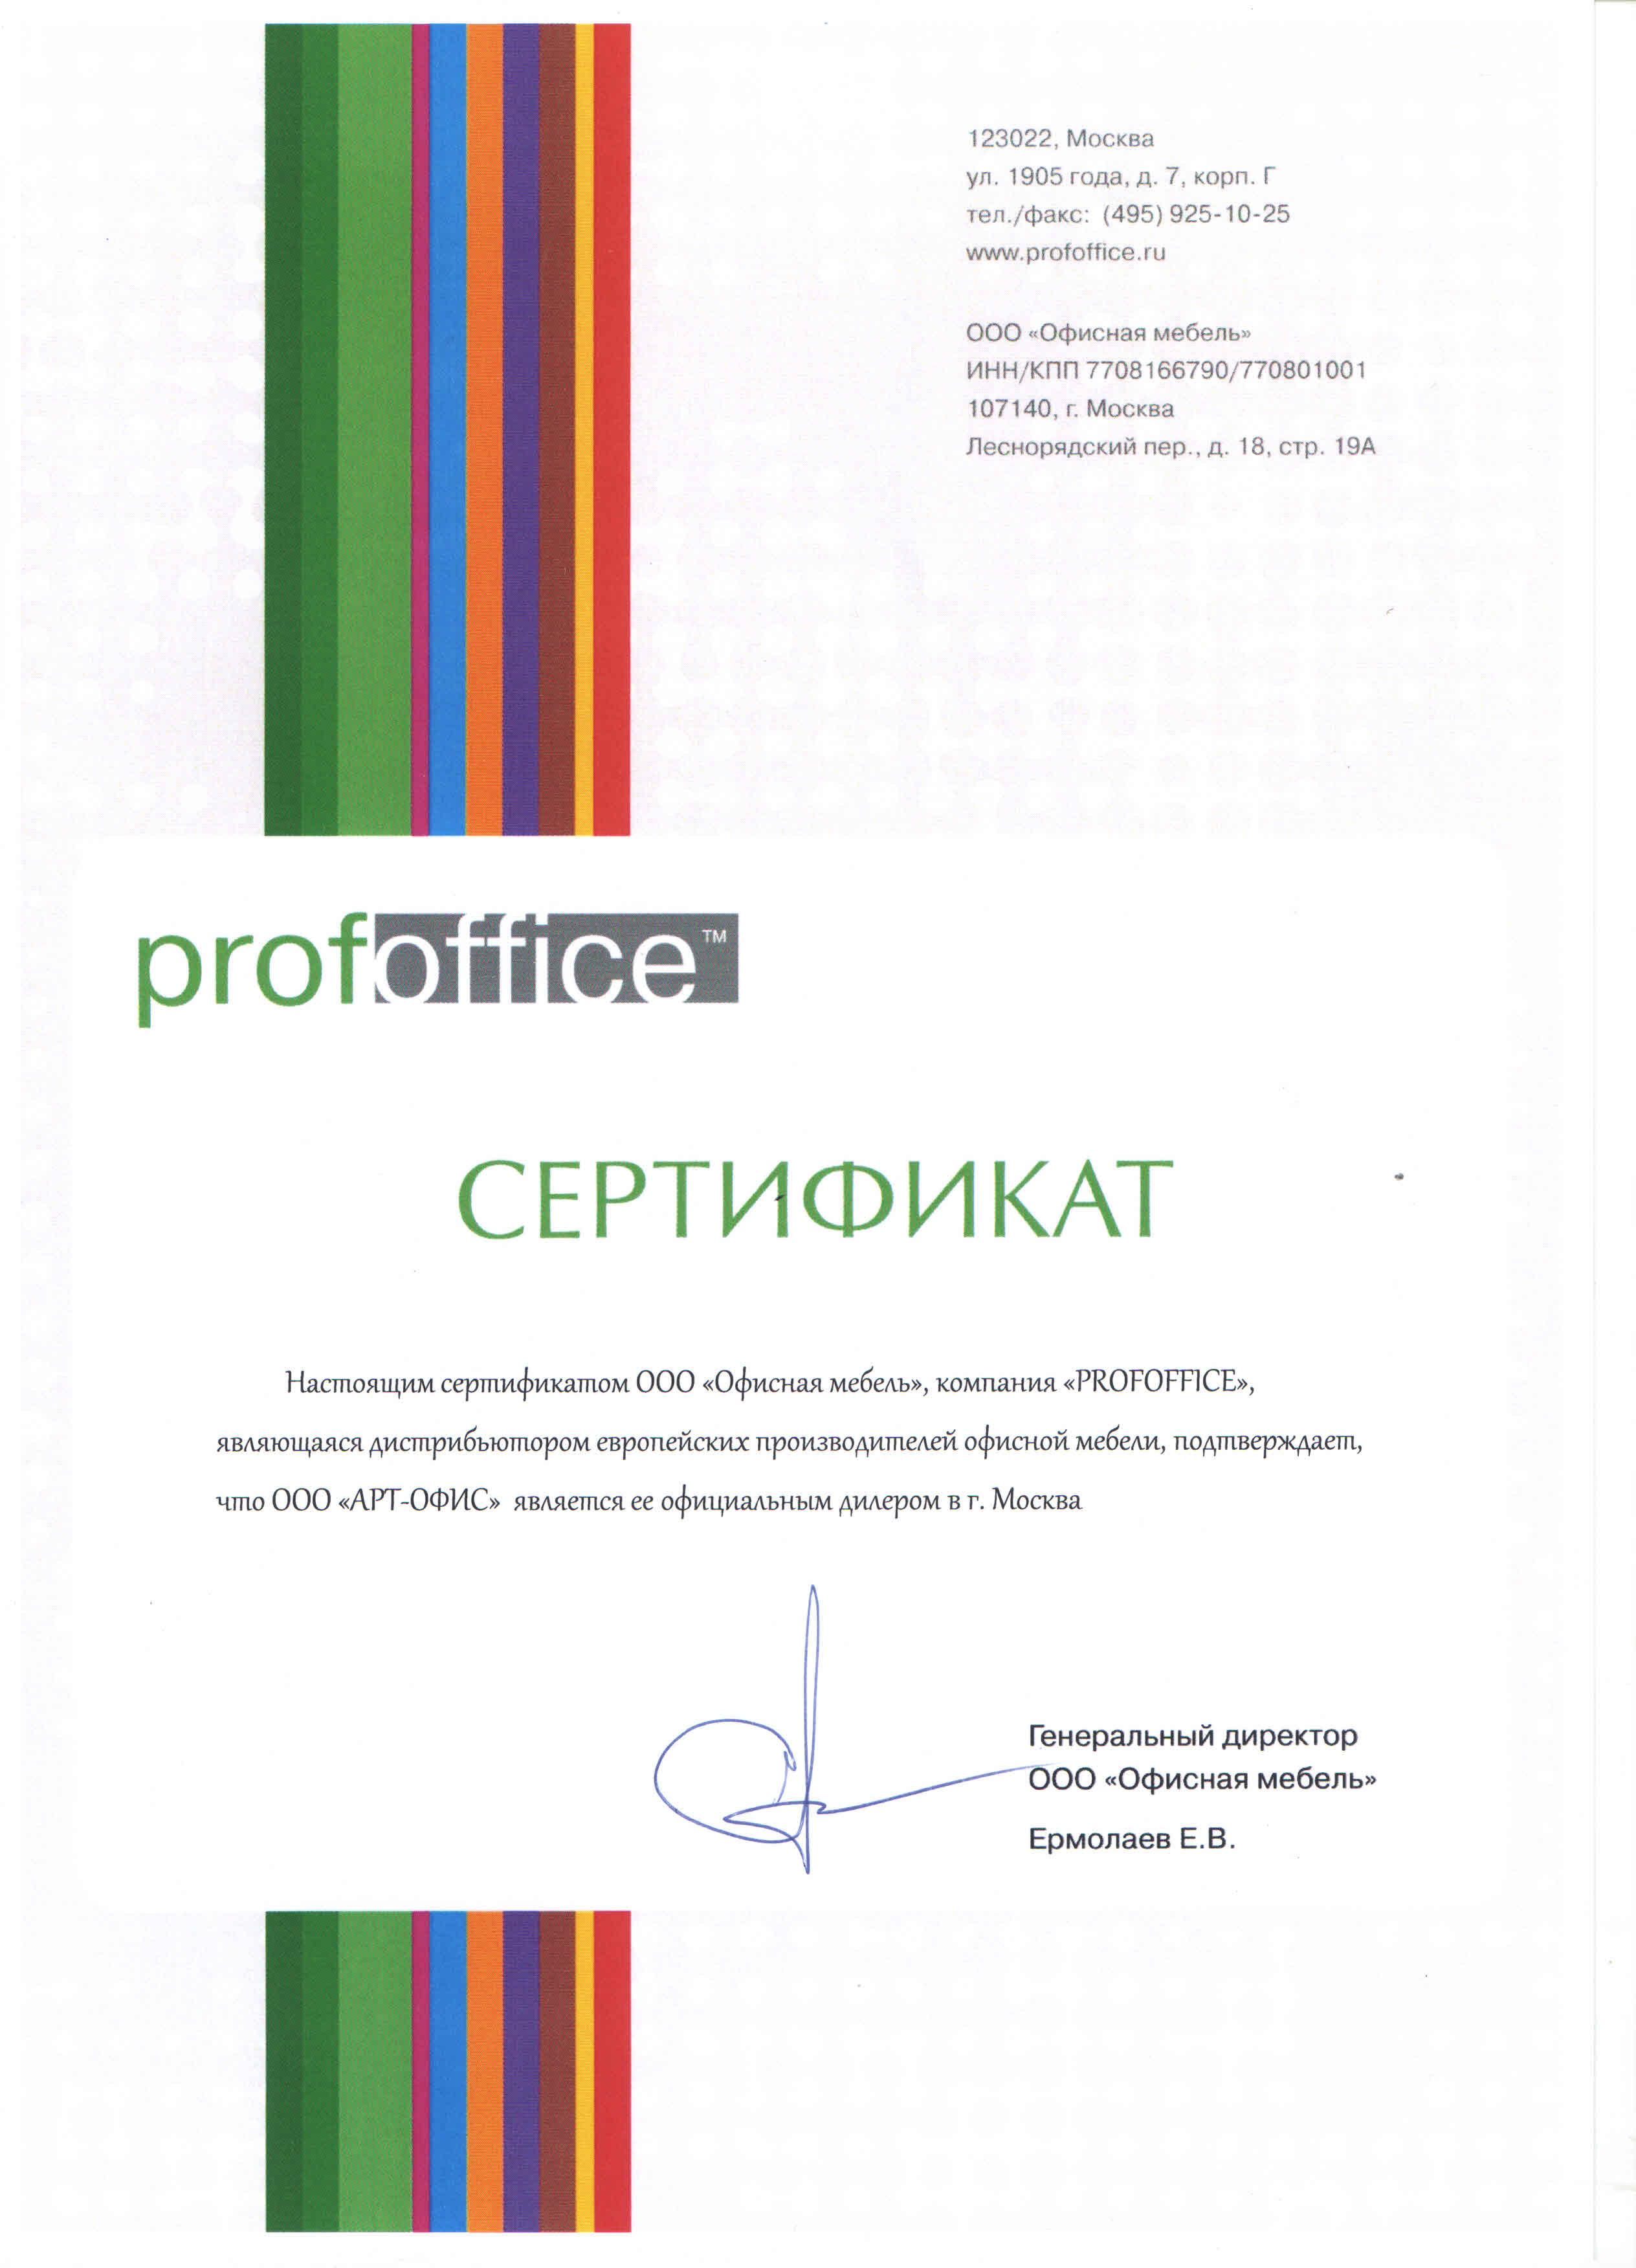 Сертификат от компании «PROFOFFICE»